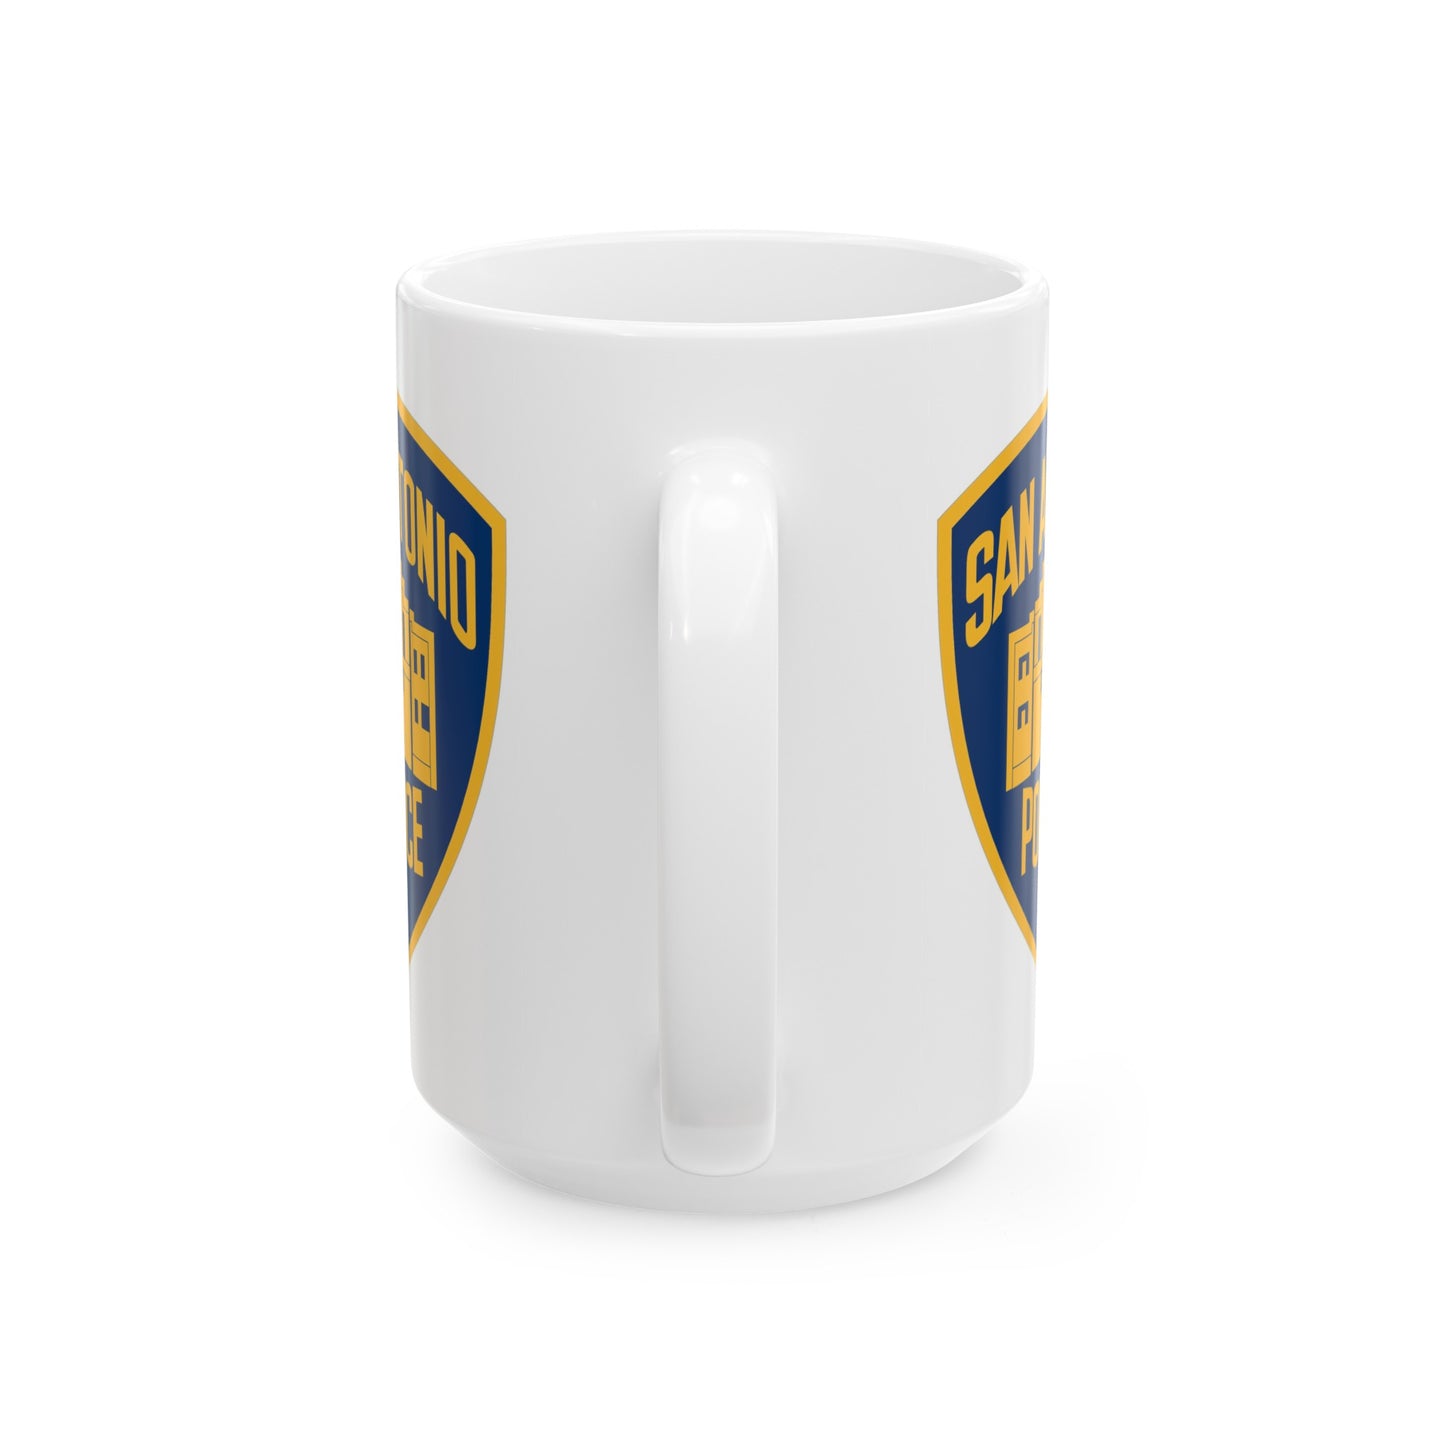 San Antonio Police Coffee Mug - Double Sided White Ceramic 15oz by TheGlassyLass.com